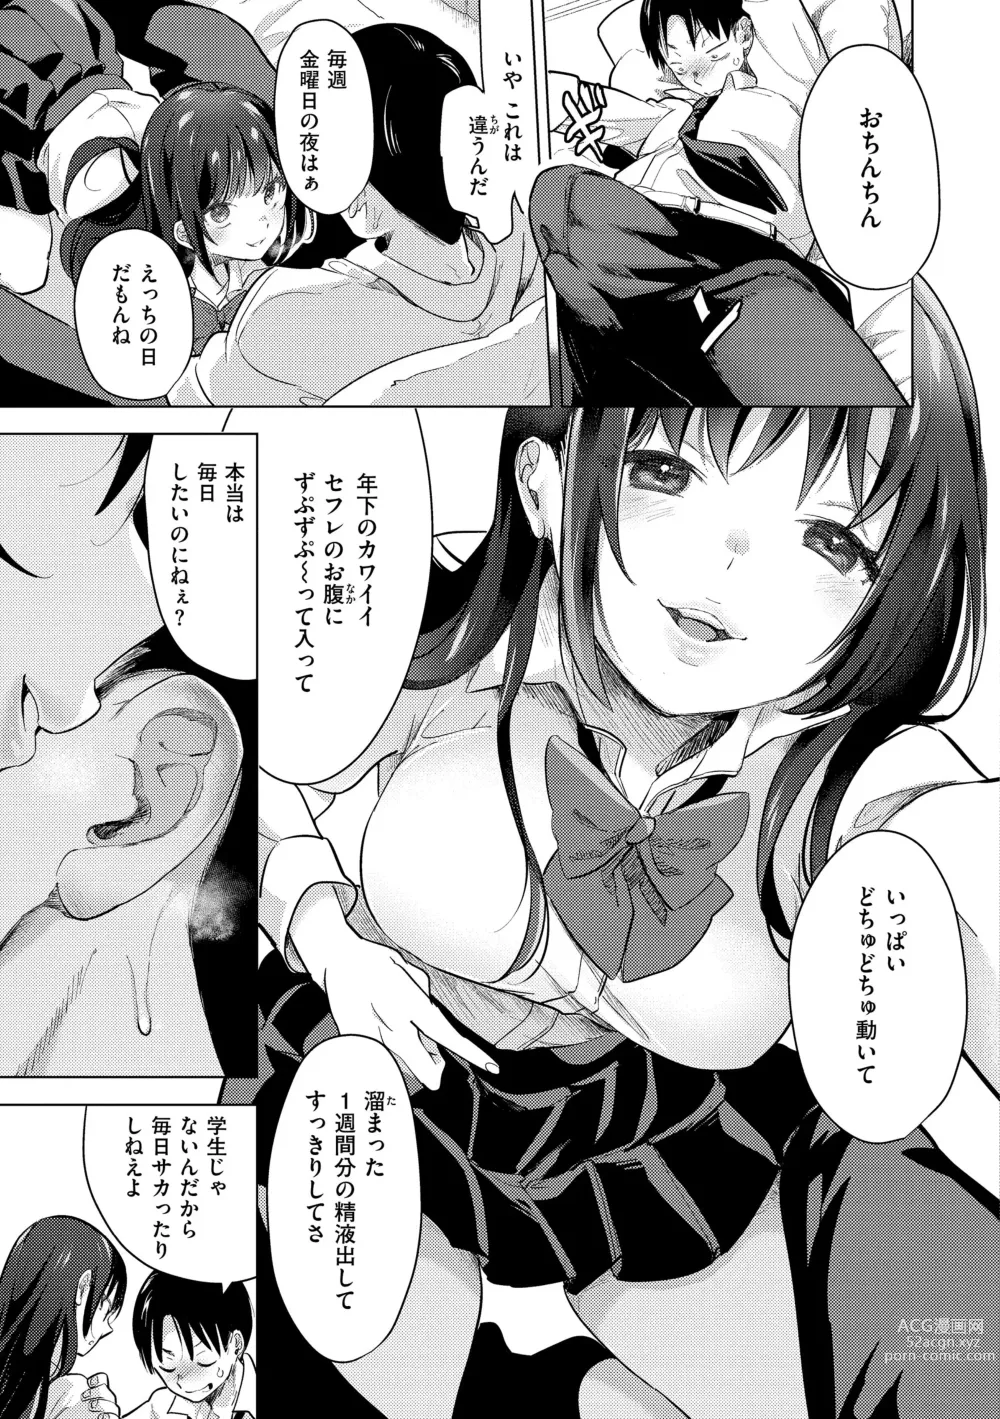 Page 7 of manga Koishite Furete - Loving and Touching